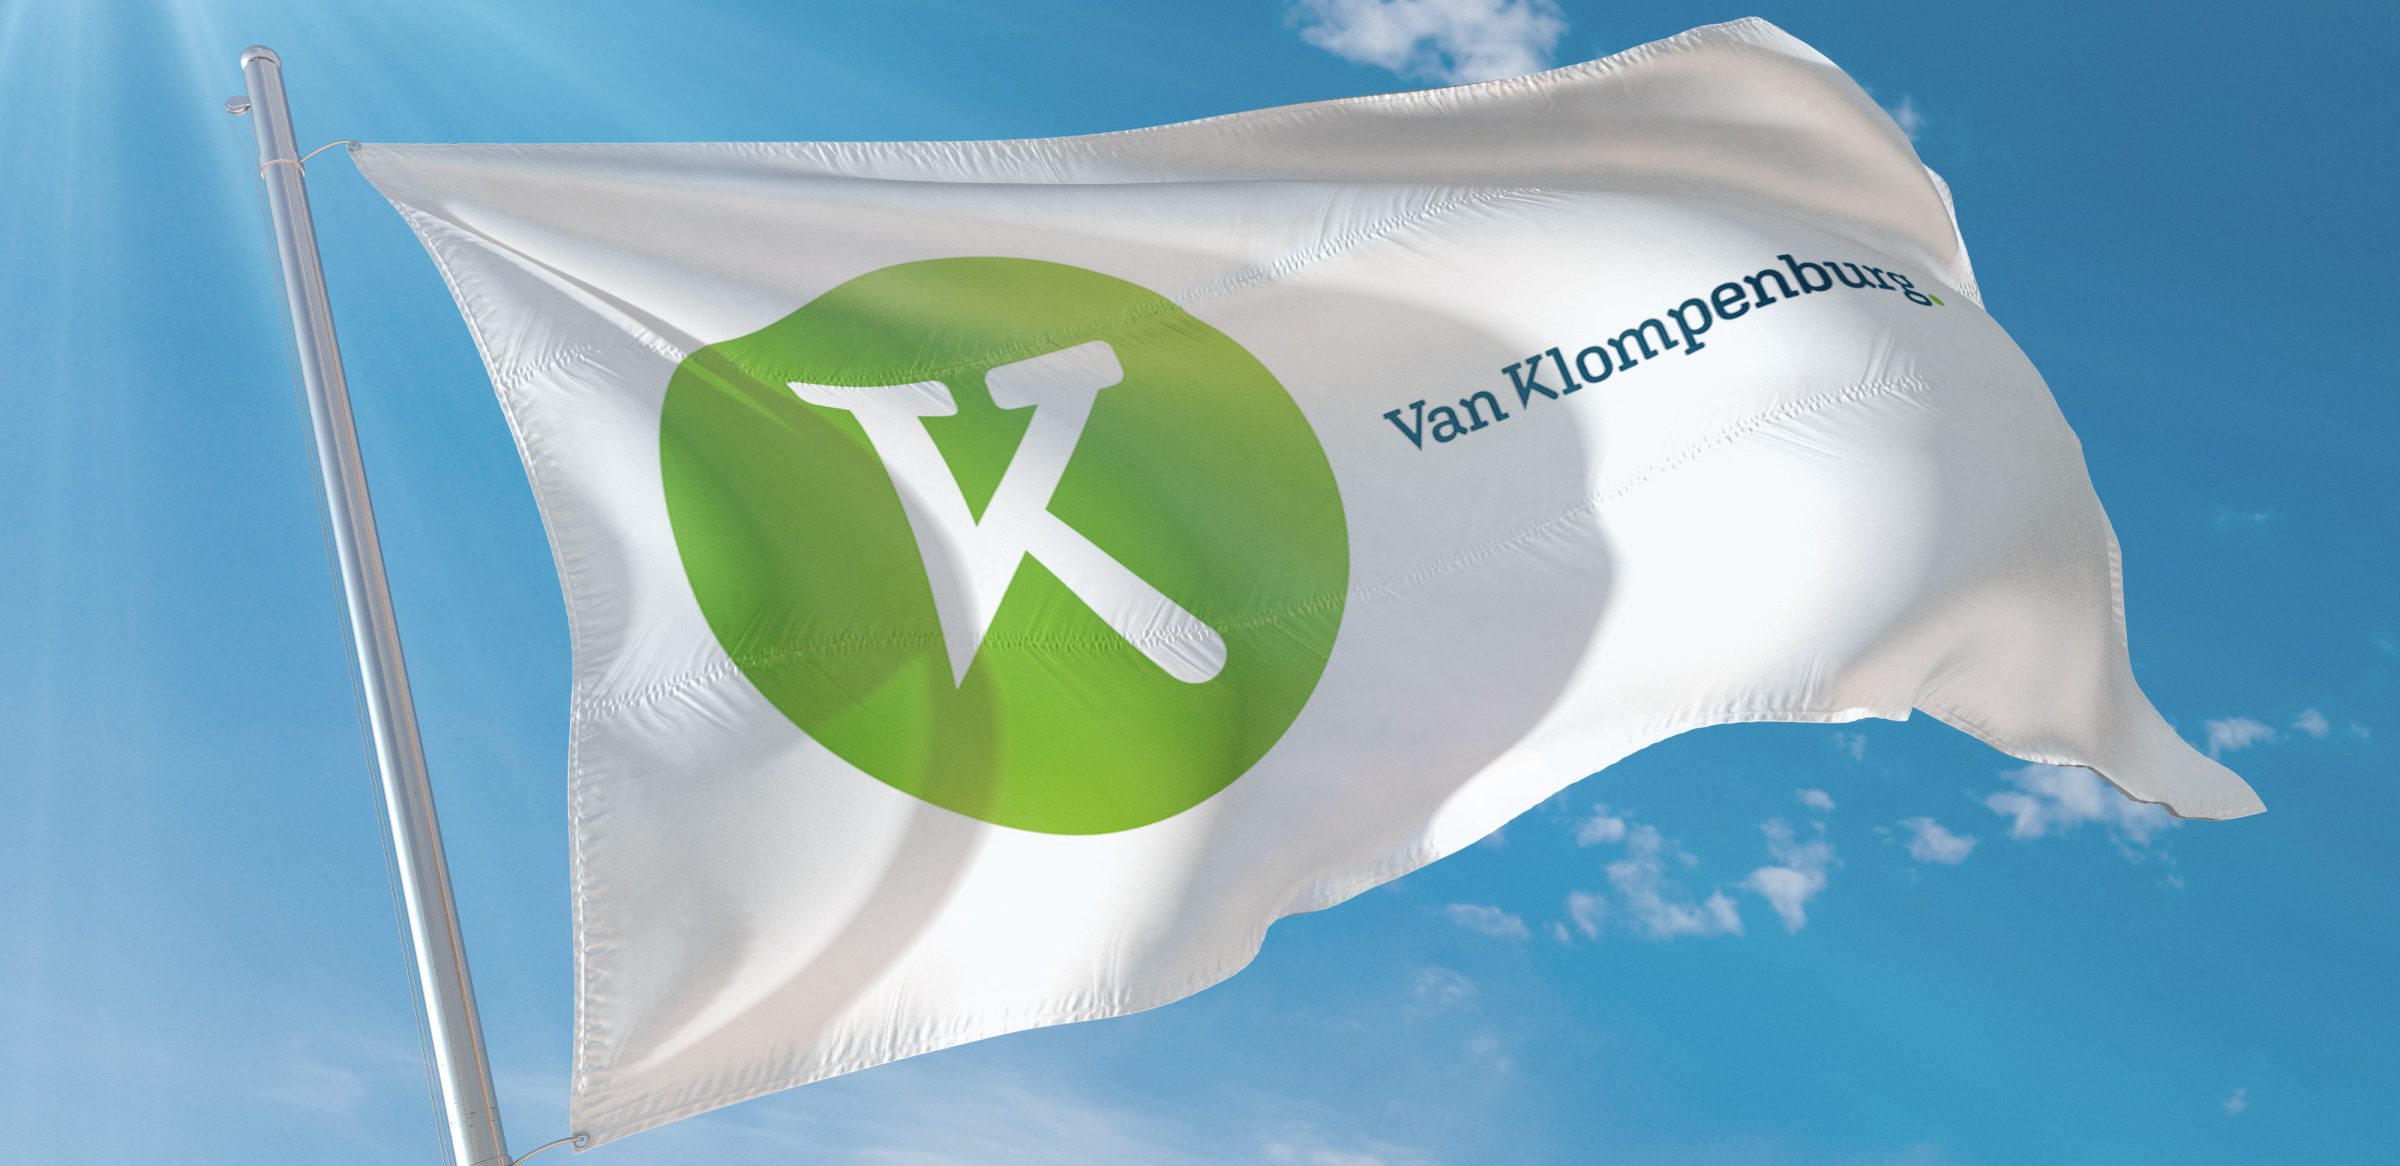 Waving flag with Van Klompenburg logo